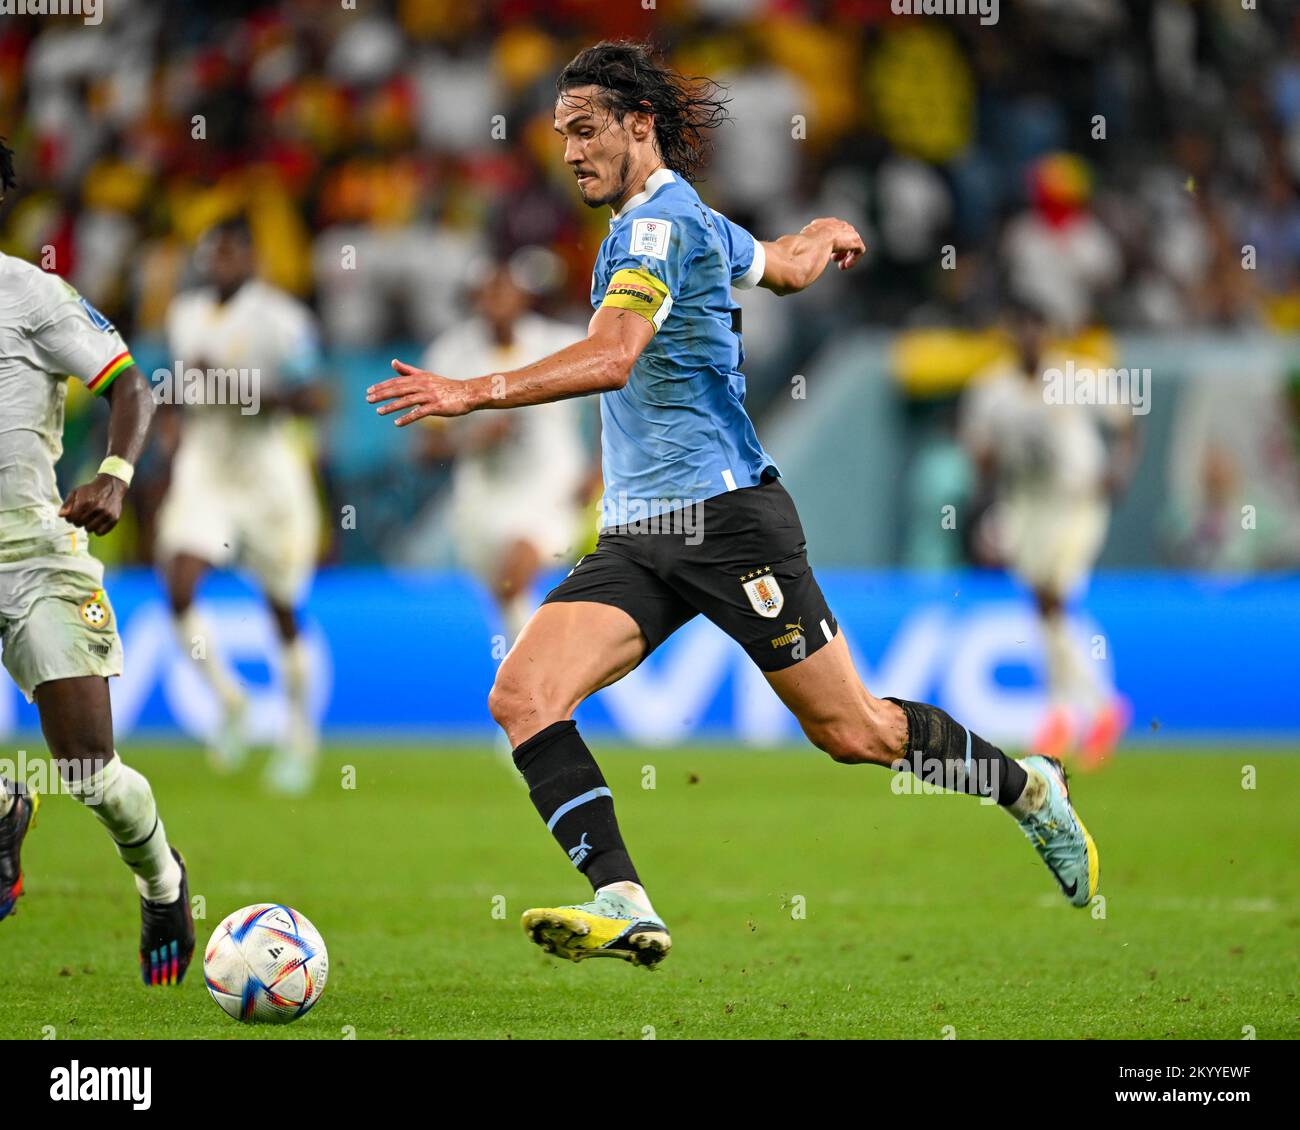 Ghana 0 - 2 Uruguay, el Mundial de Qatar 2022